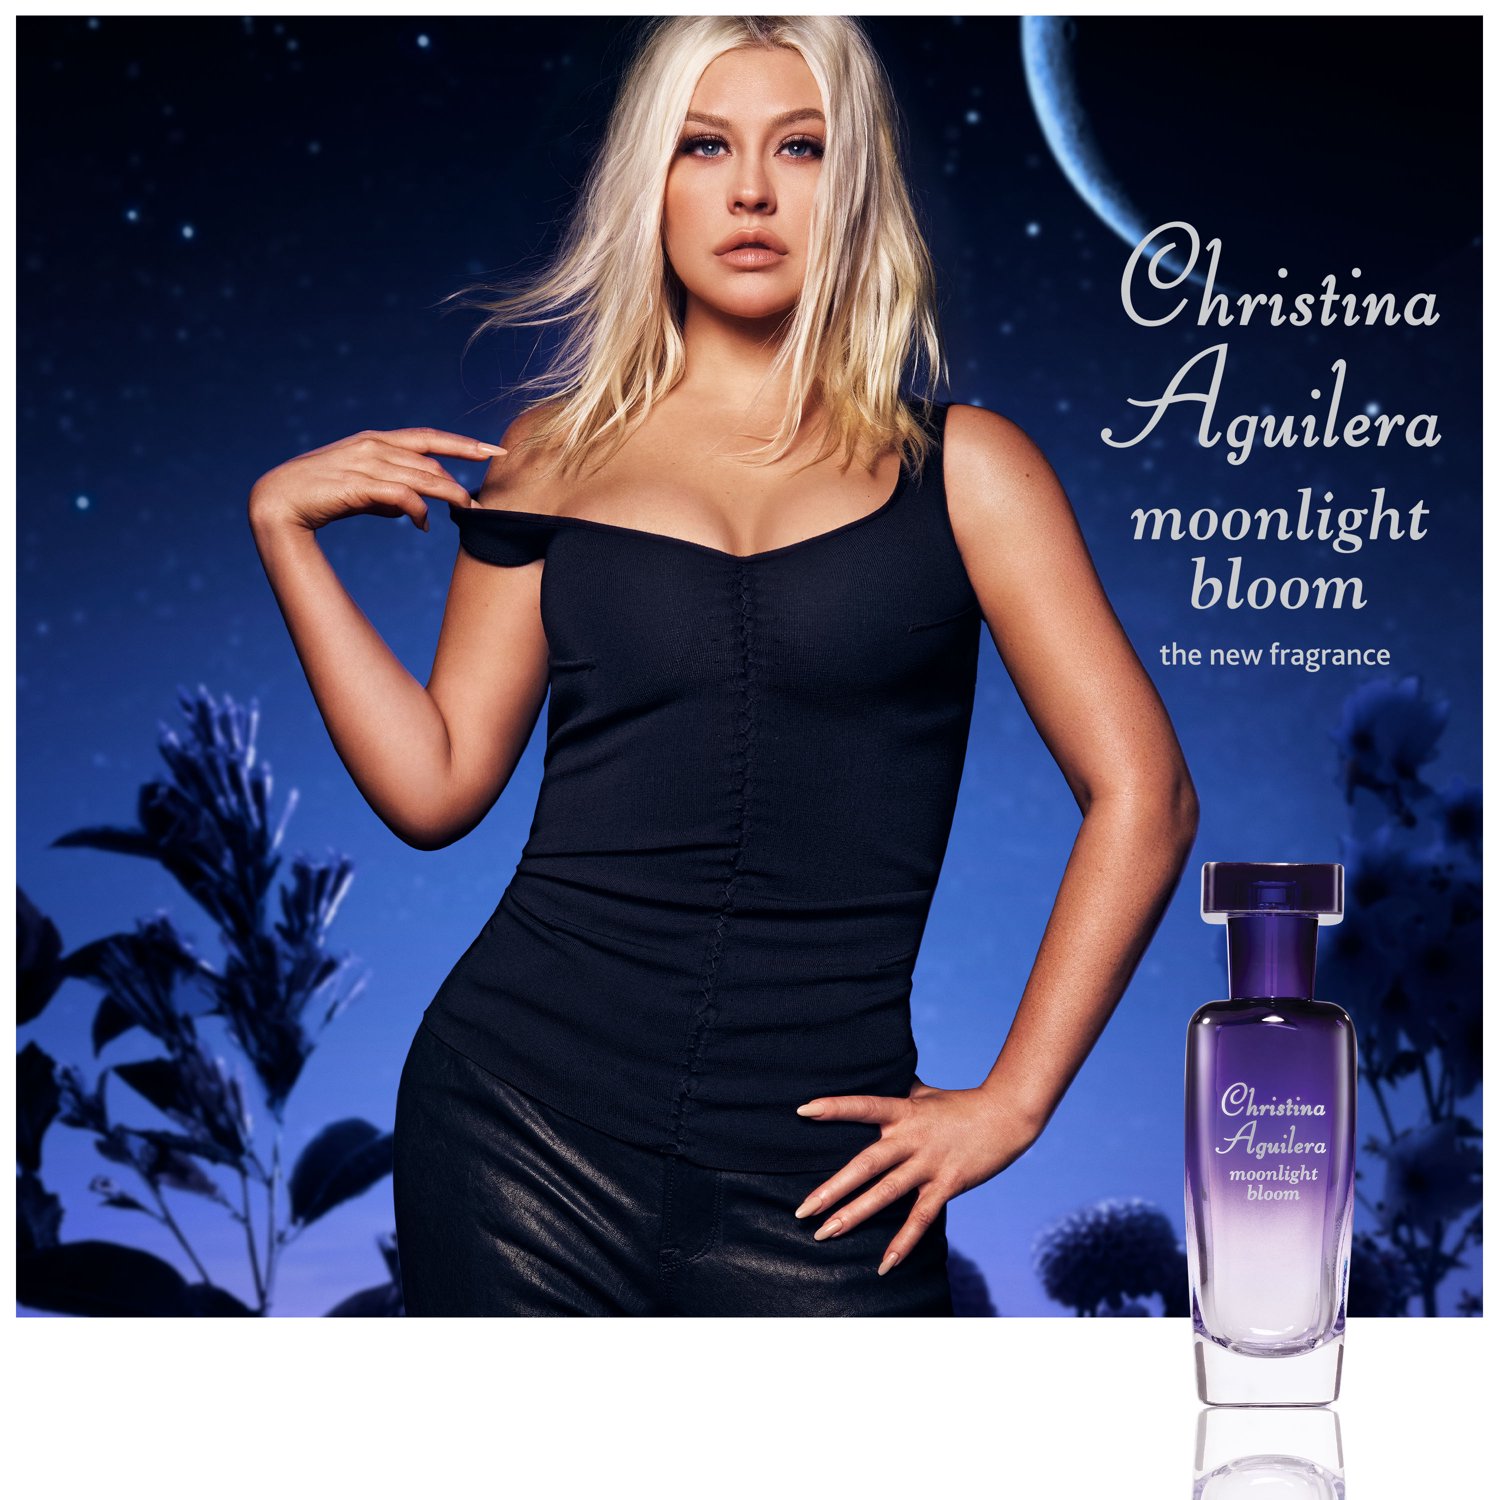 Christina Aguilera Moonlight Bloom Eau De Parfum, Perfume for Women, 1 Oz - image 5 of 7